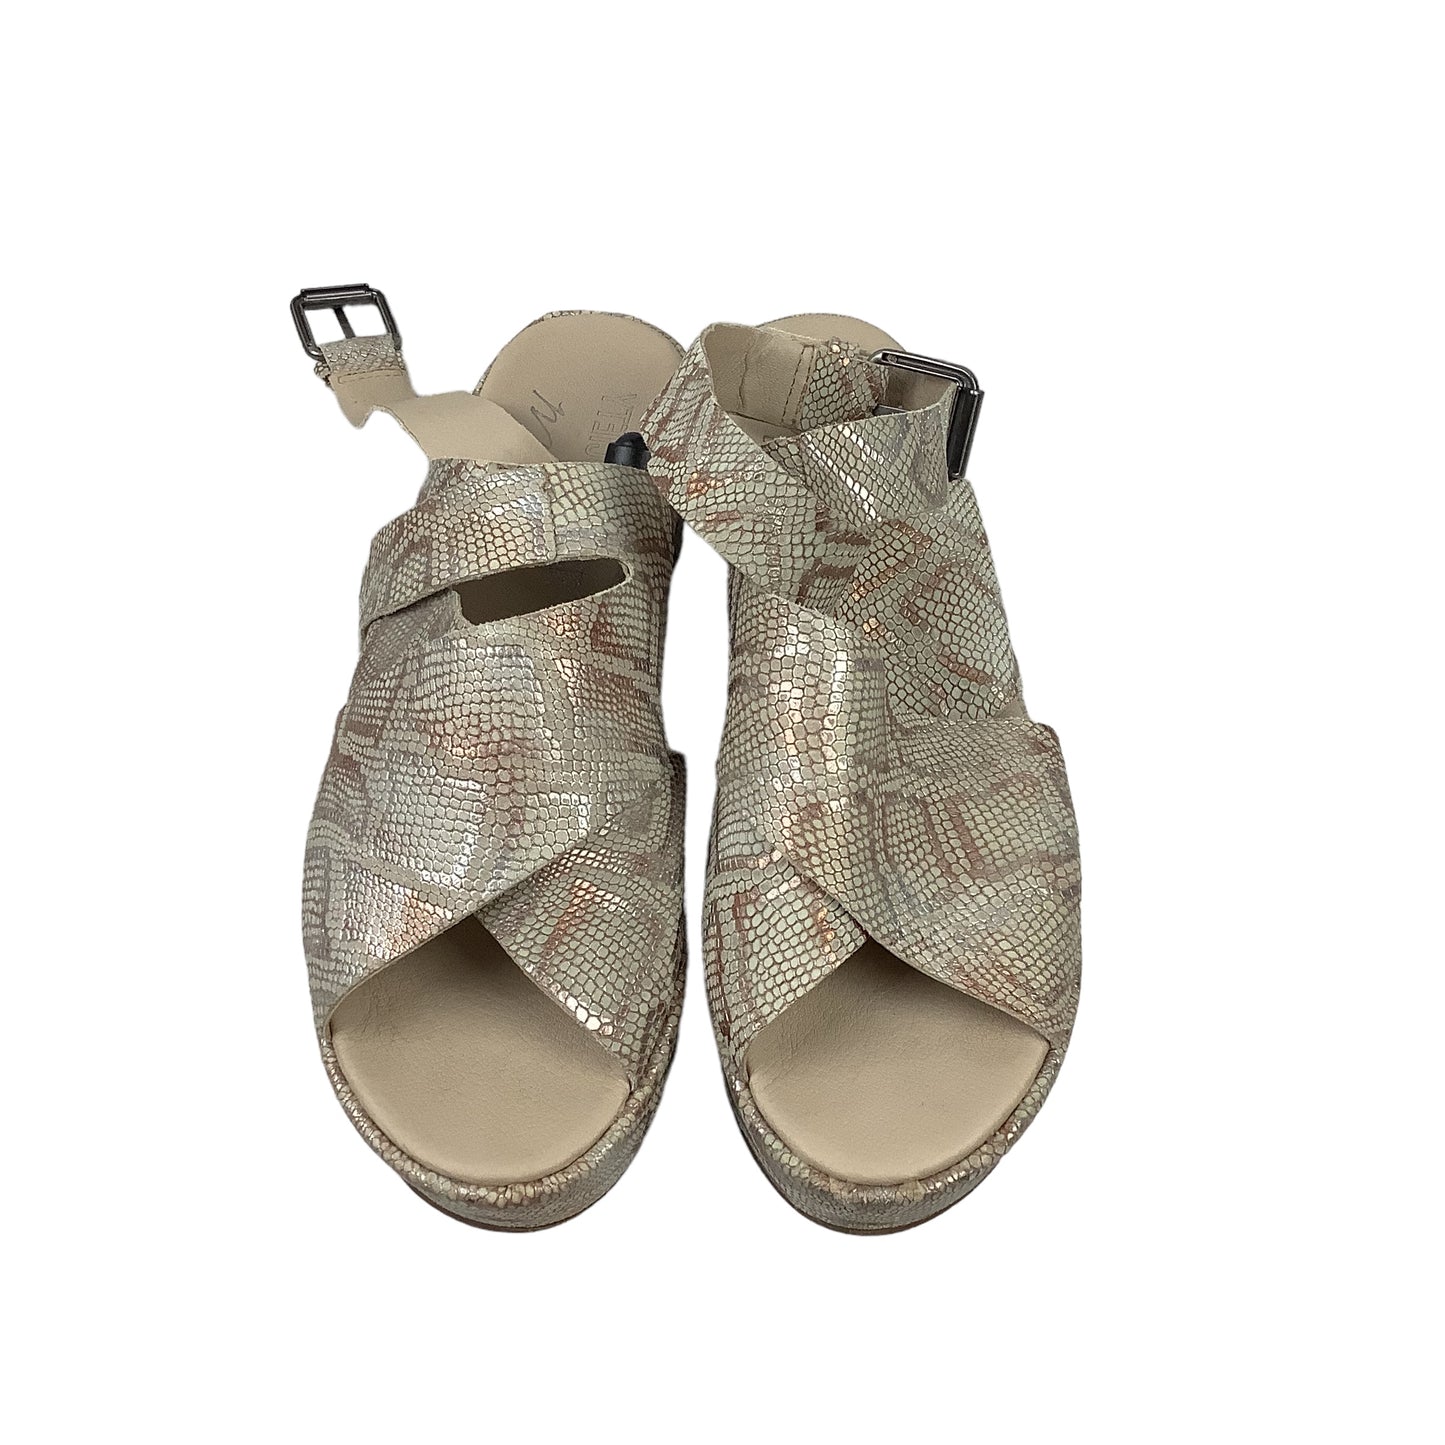 Sandals Heels Wedge By Matisse  Size: 9